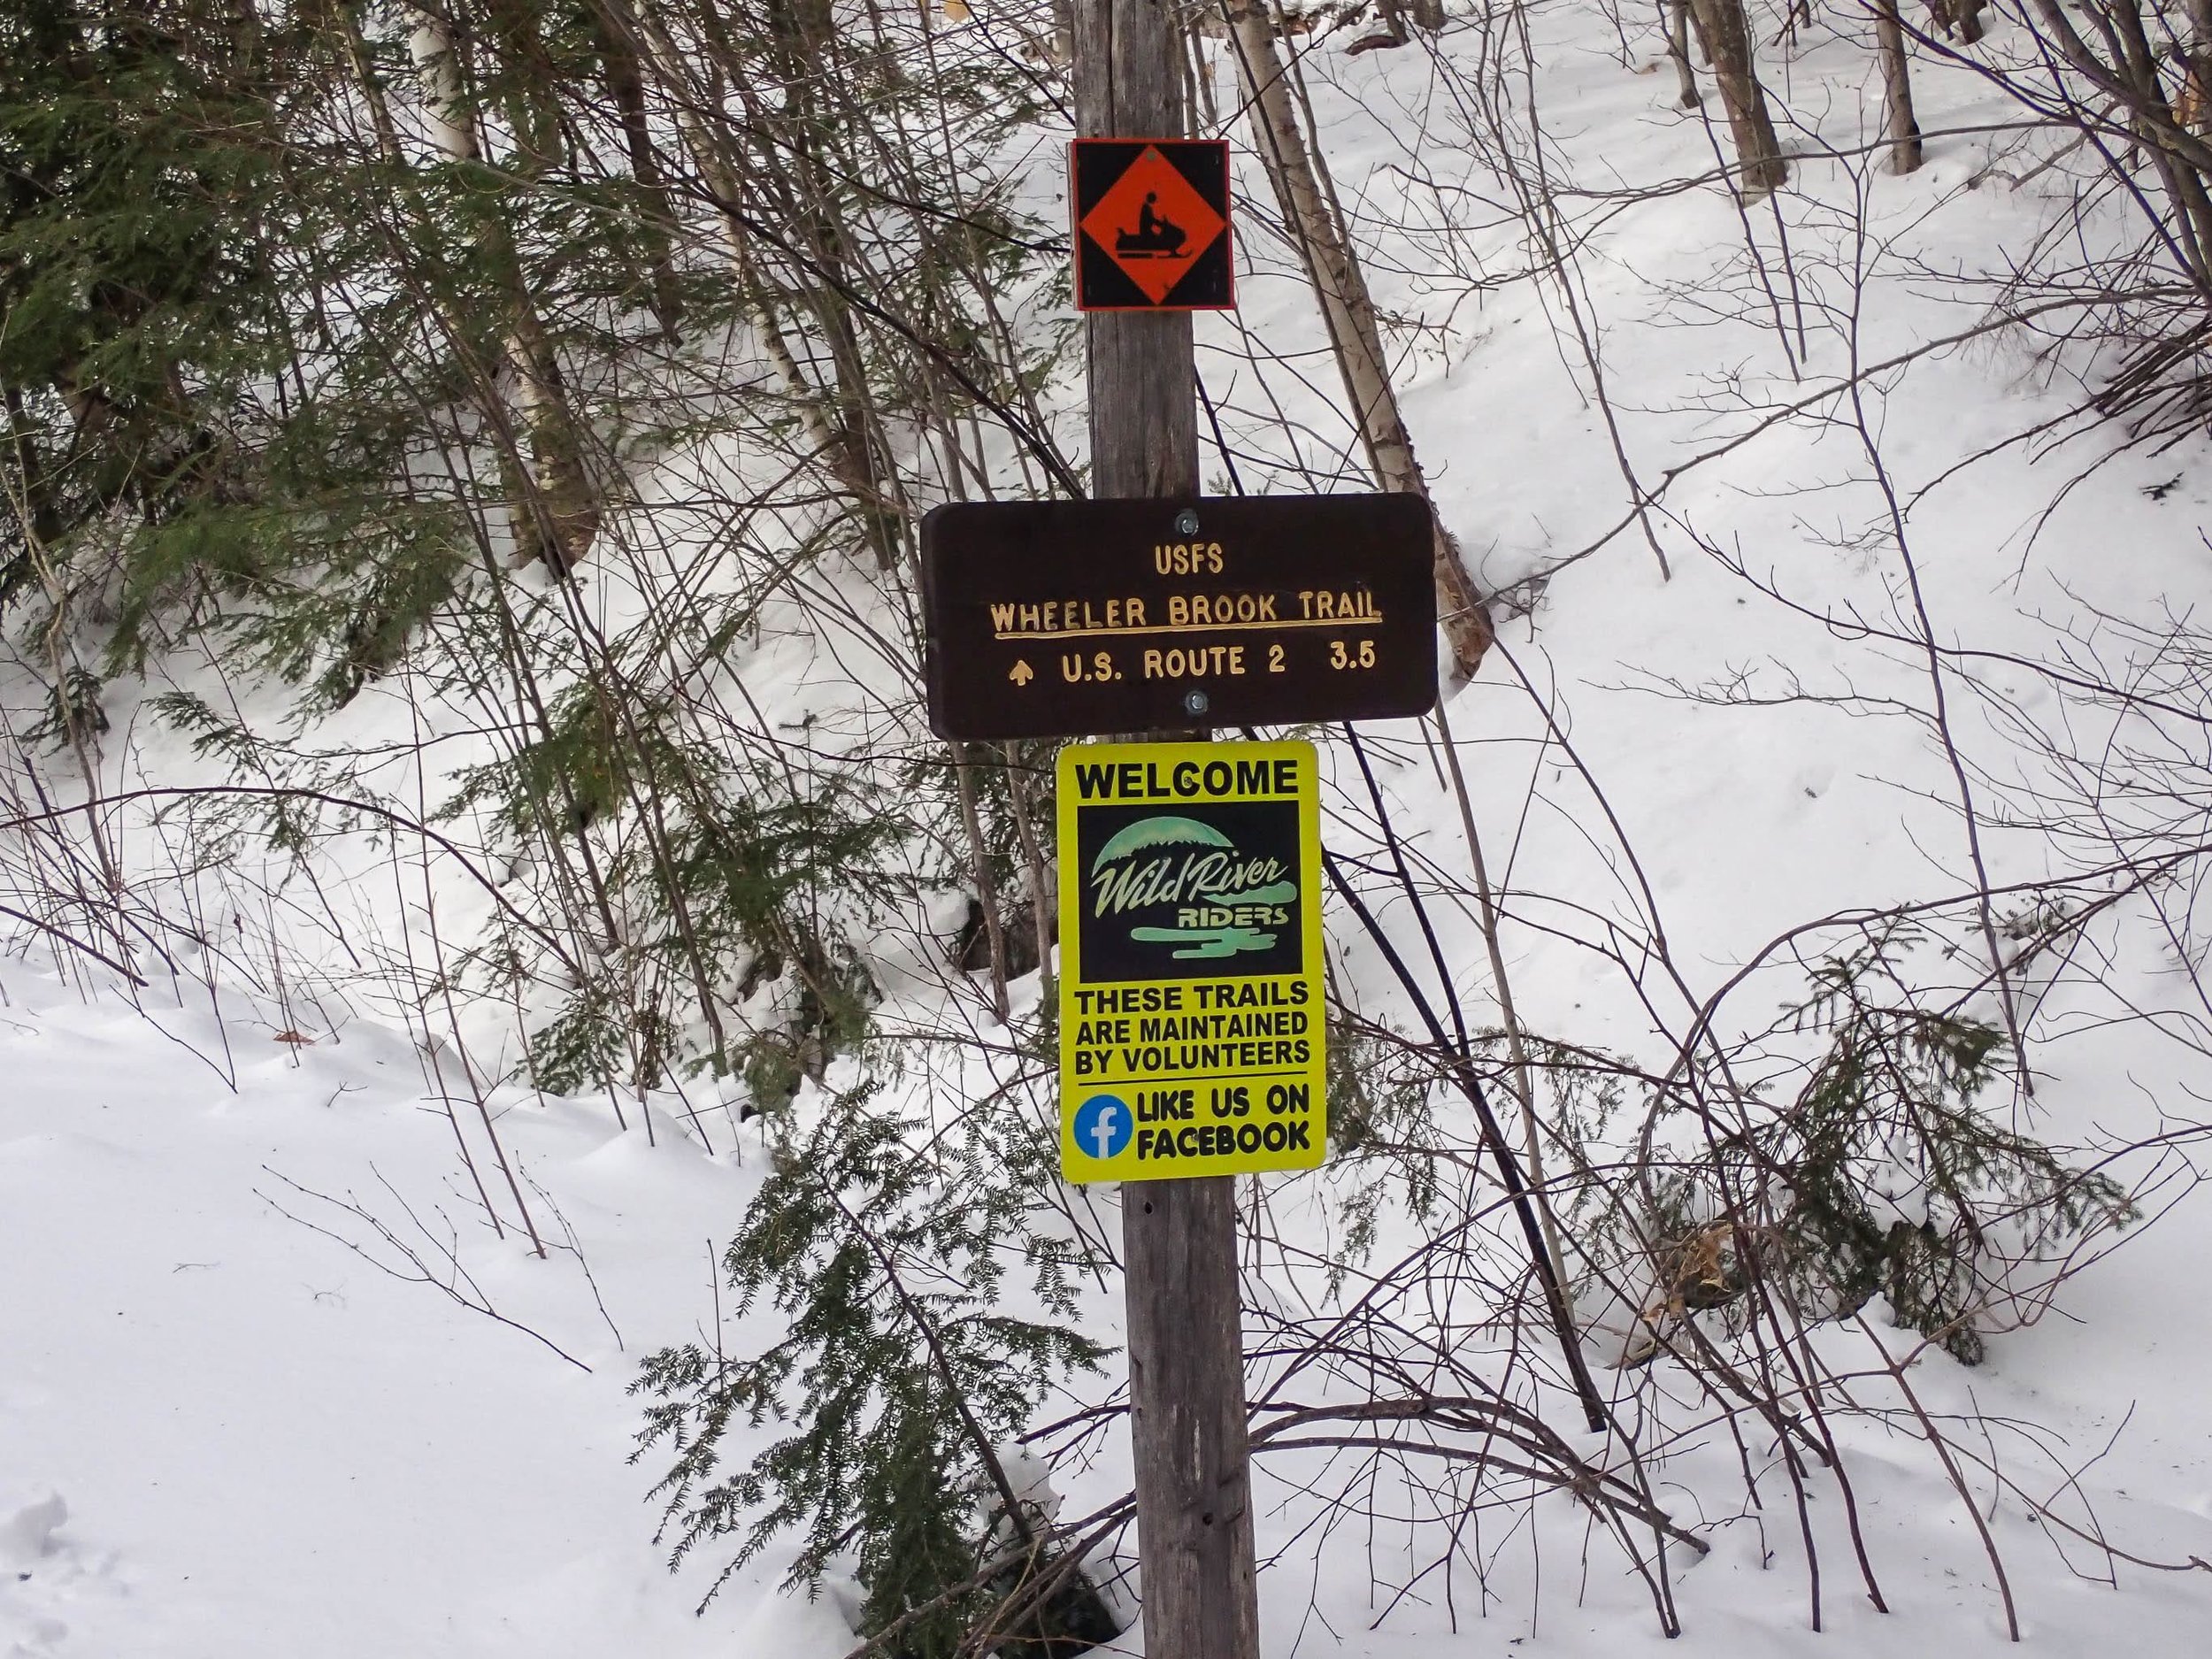   Signage on trail  